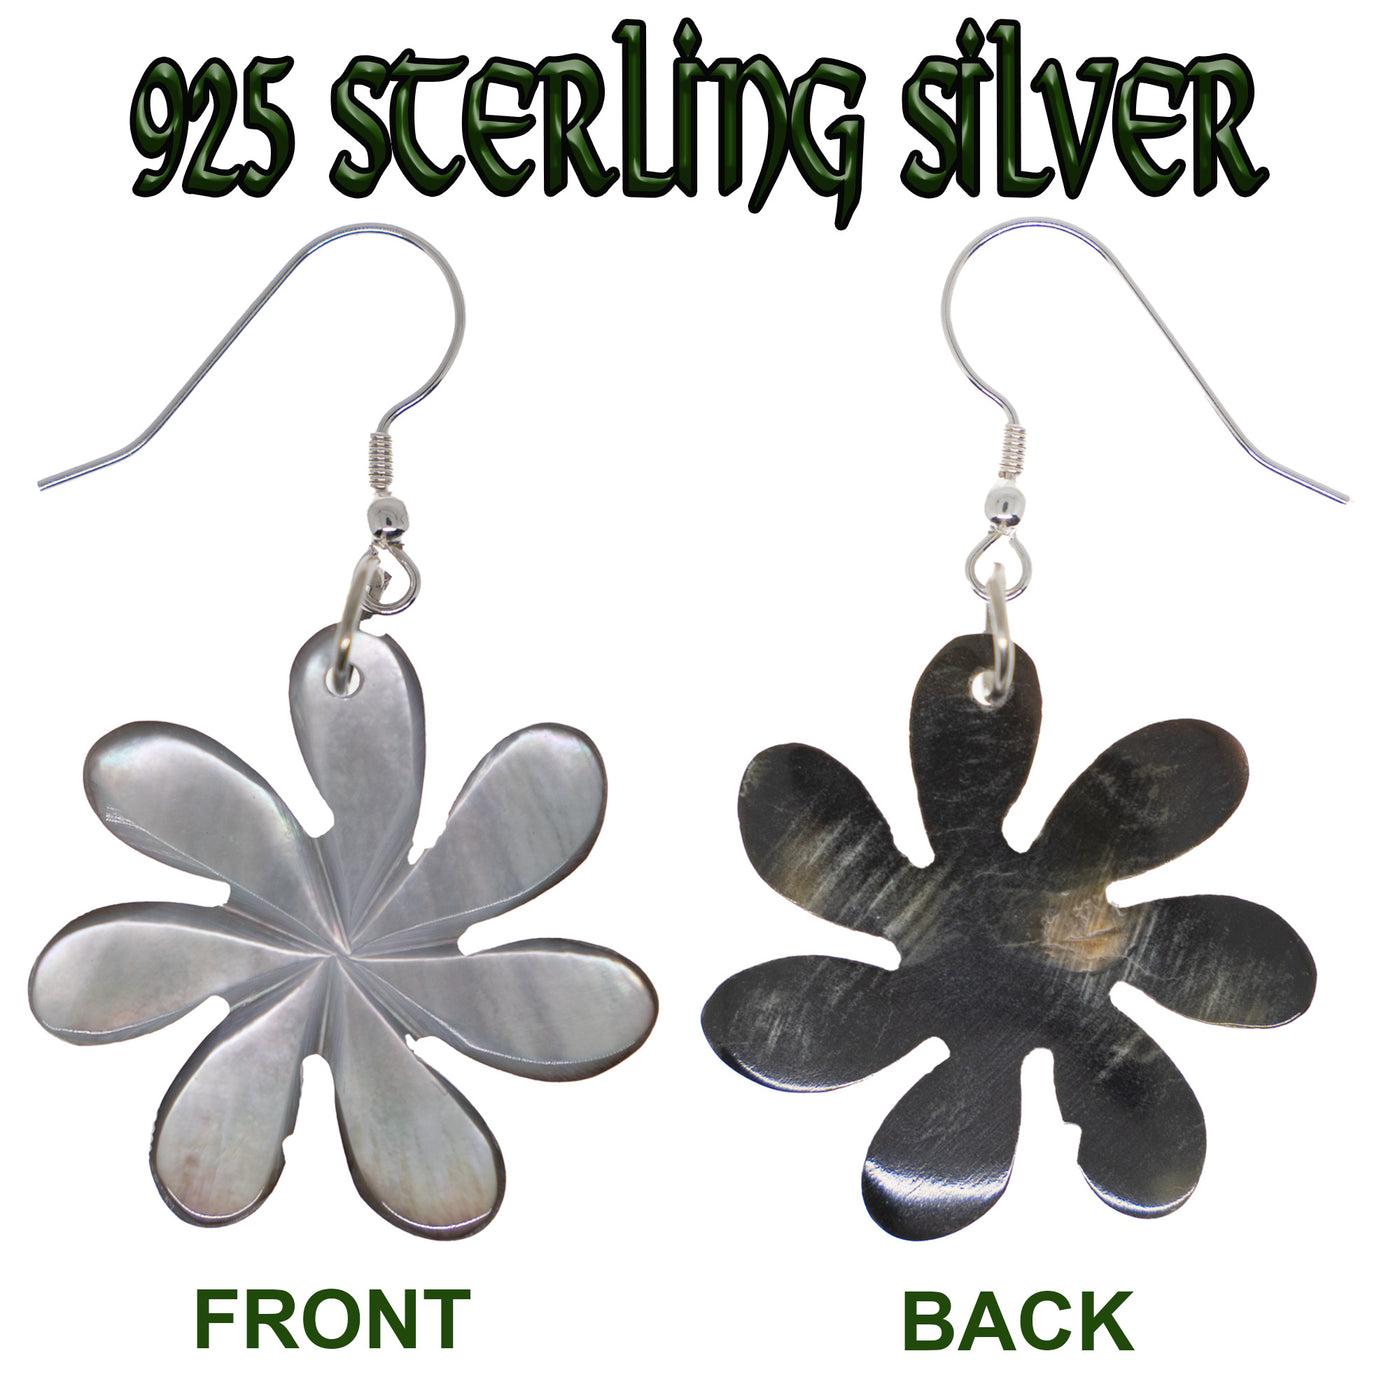 Black Oyster Shell Flower Earrings -  .925 sterling silver